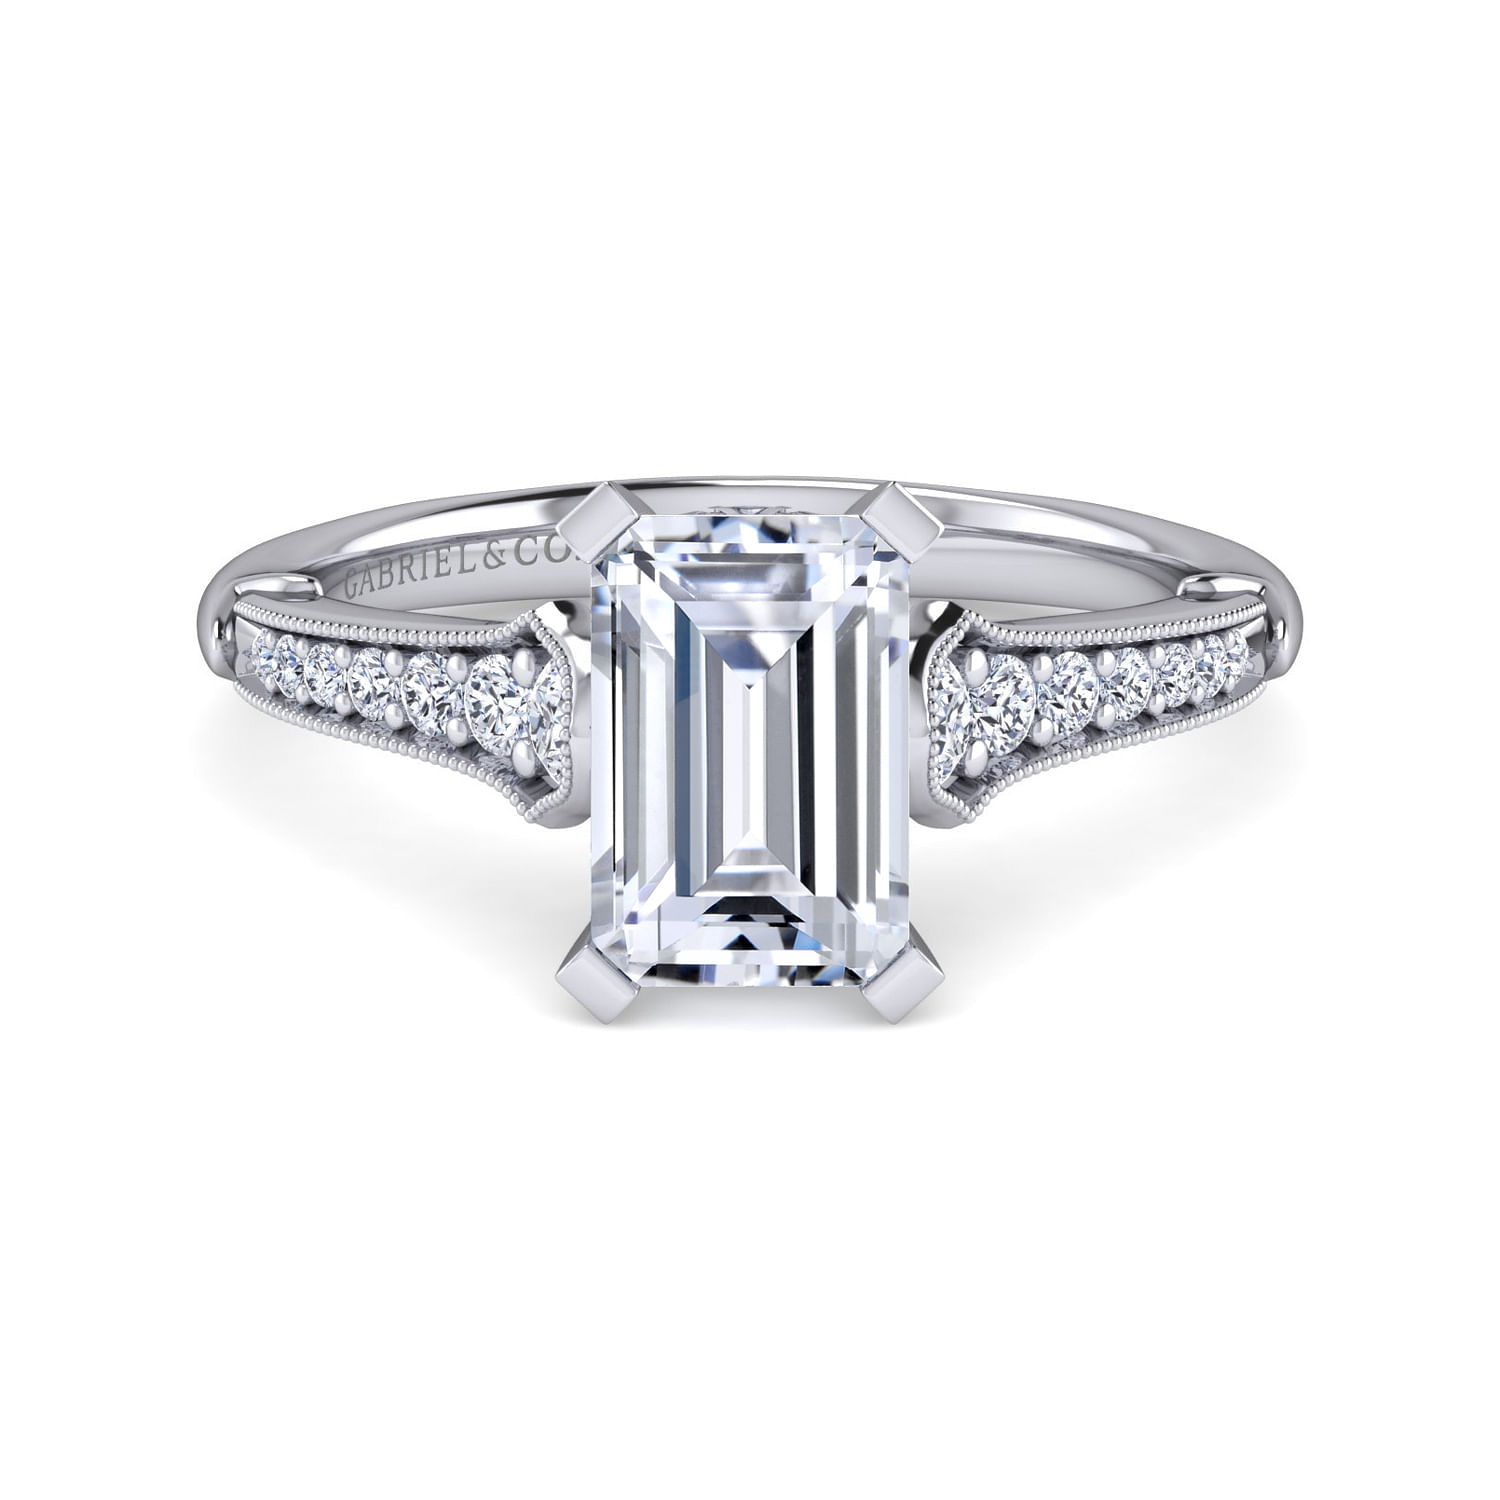 Hollis - 14K White Gold Emerald Cut Diamond Engagement Ring